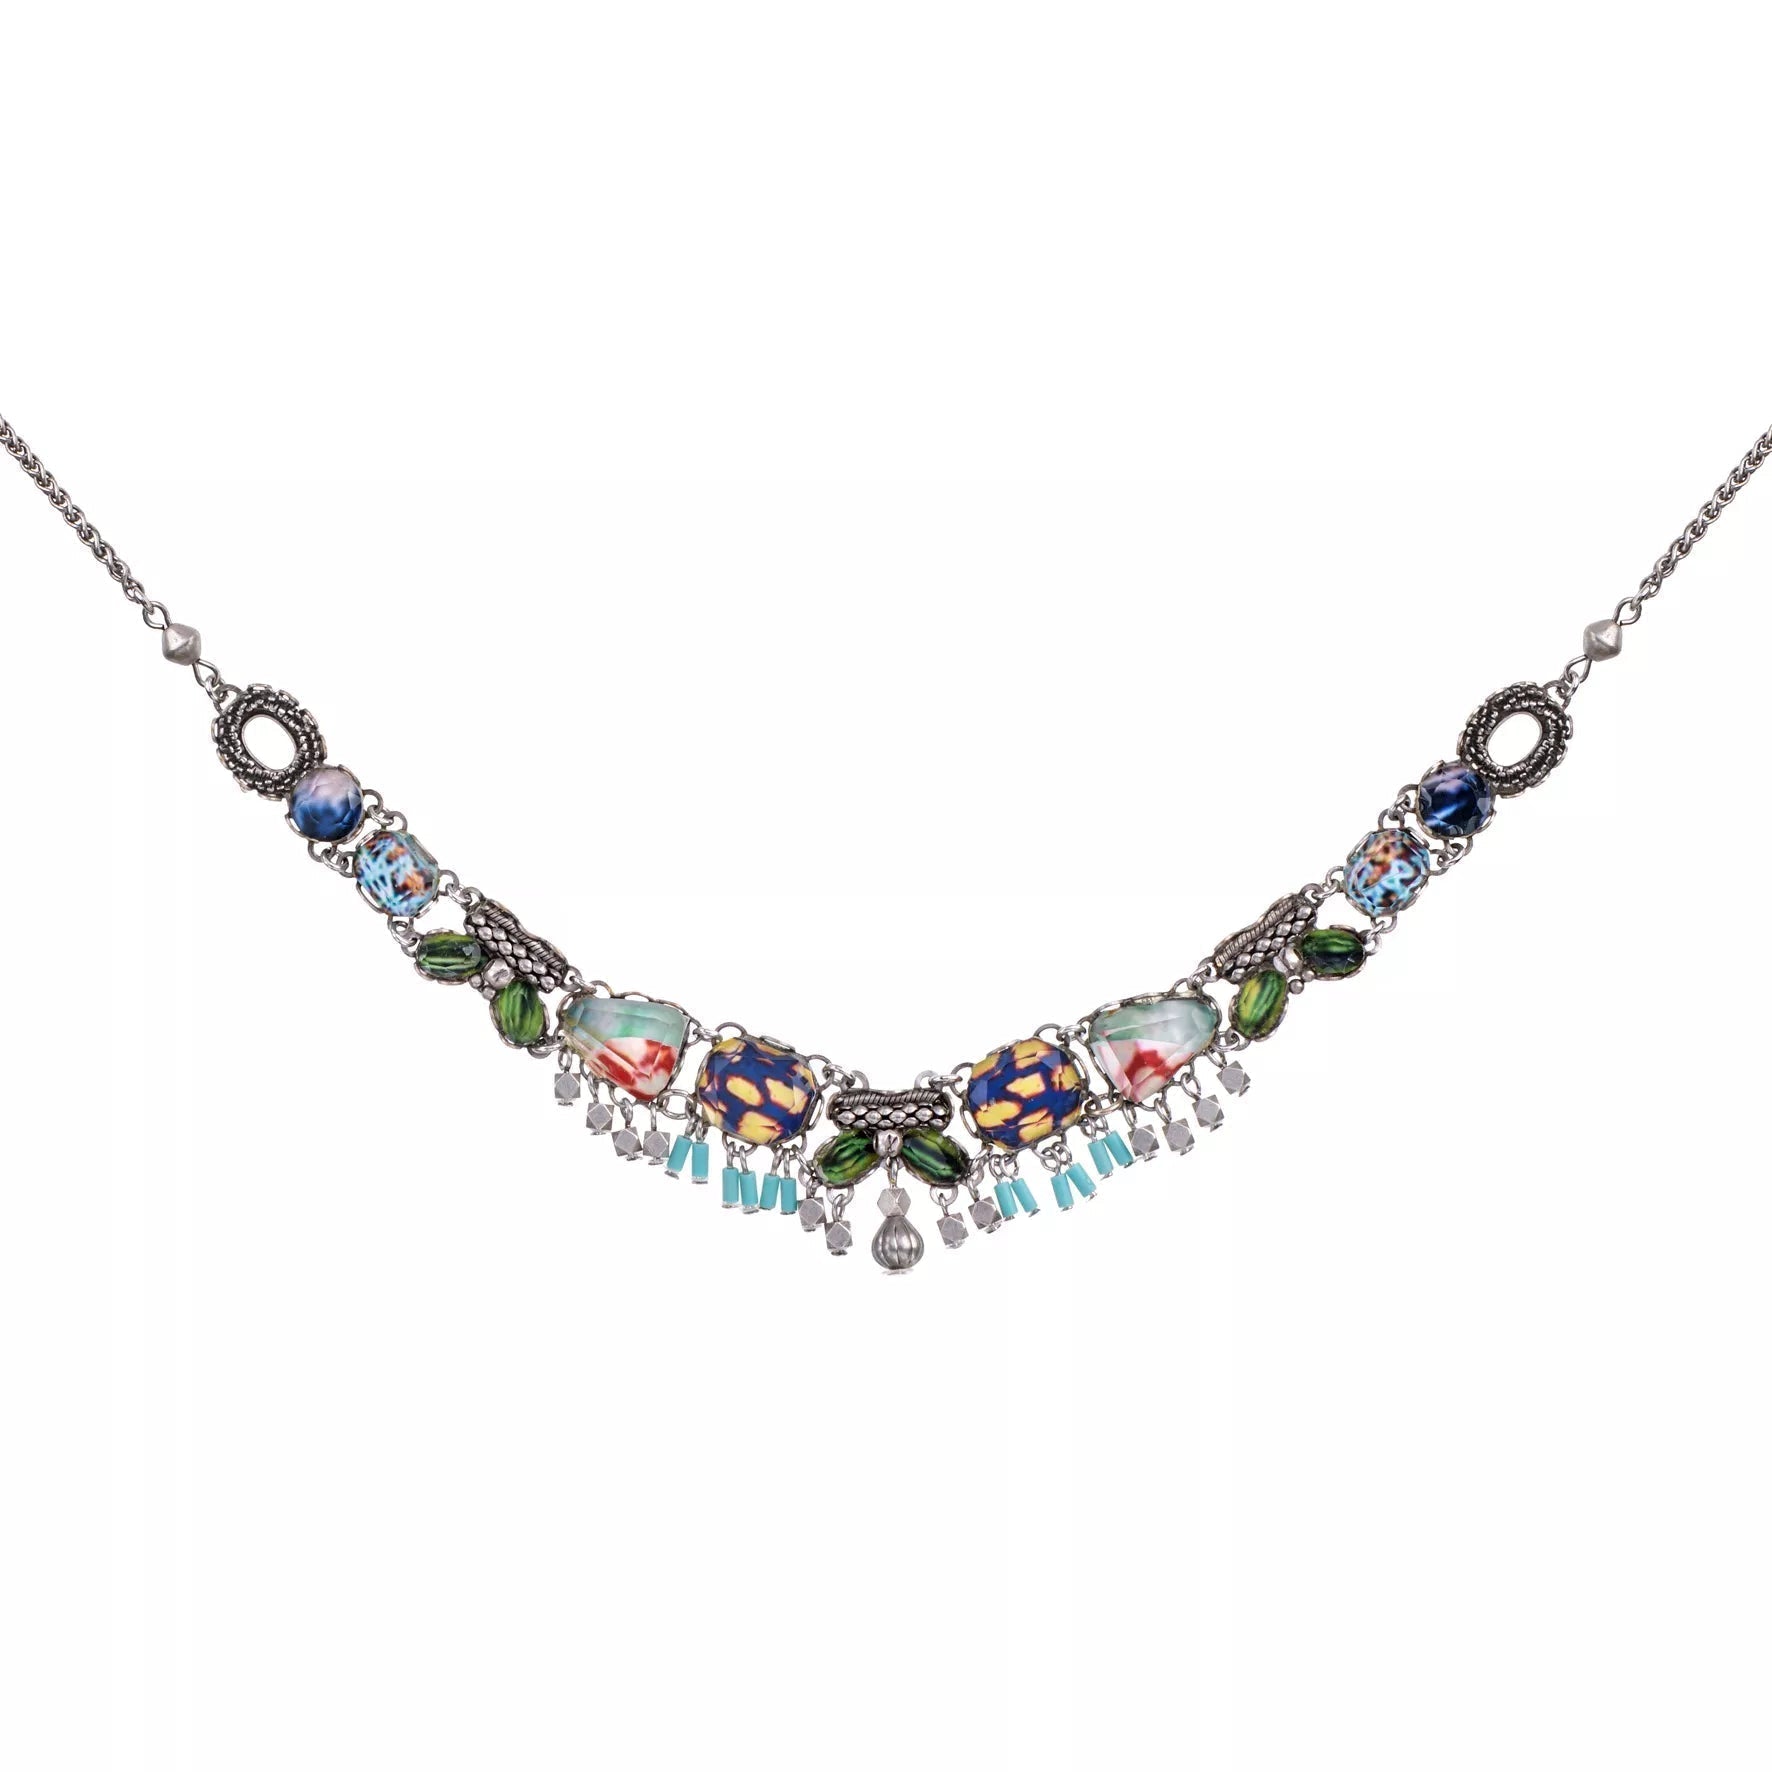 Carnival Necklace - The Nancy Smillie Shop - Art, Jewellery & Designer Gifts Glasgow